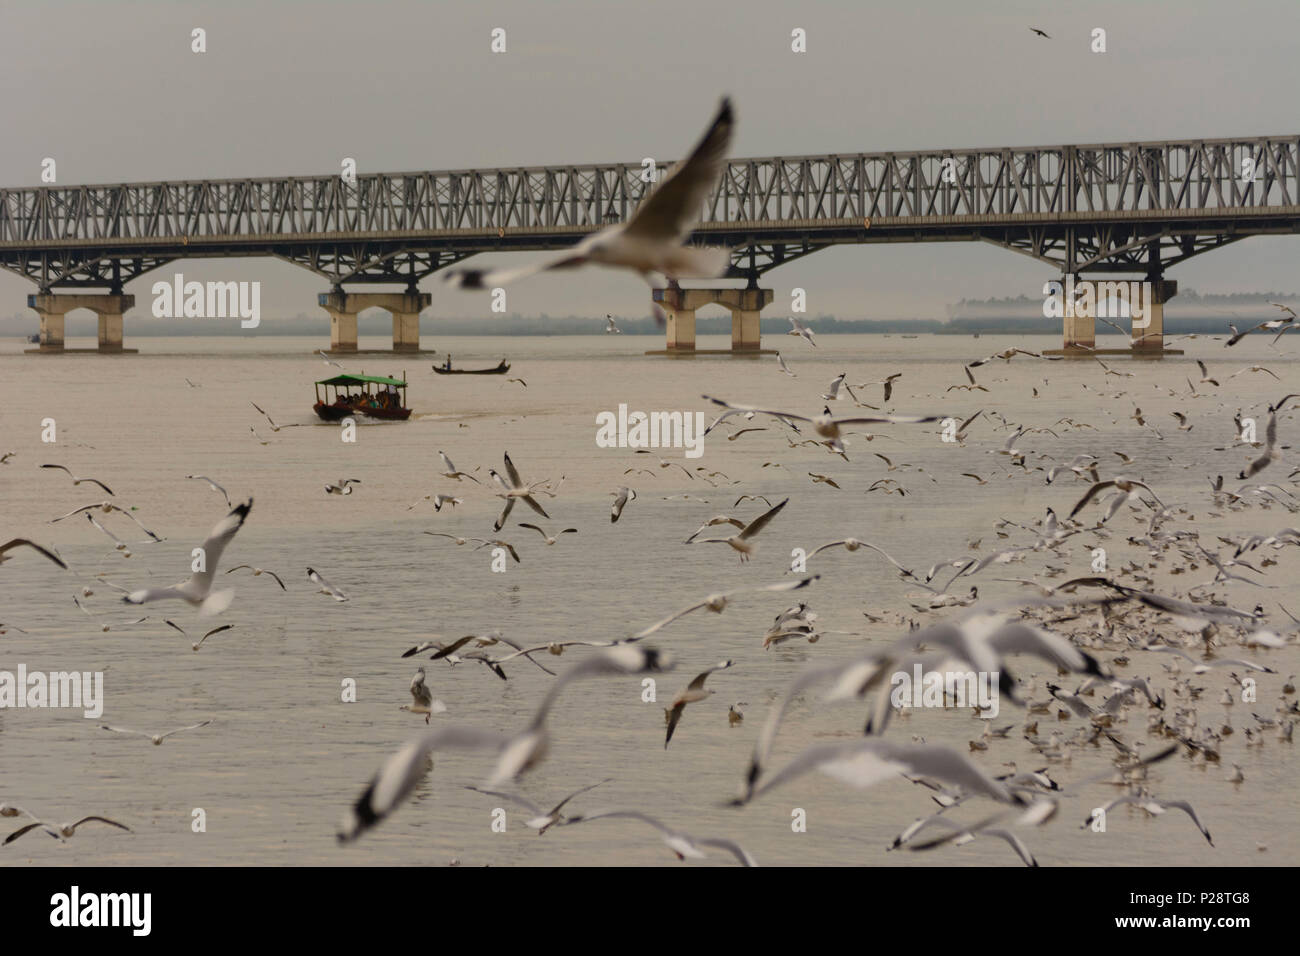 Mawlamyine (Mawlamyaing, Moulmein), Thanlwin Bridge, Thanlwin (Salween) River, road and railway bridge, fishing boat, people feed gulls, Mon State, Myanmar (Burma) Stock Photo